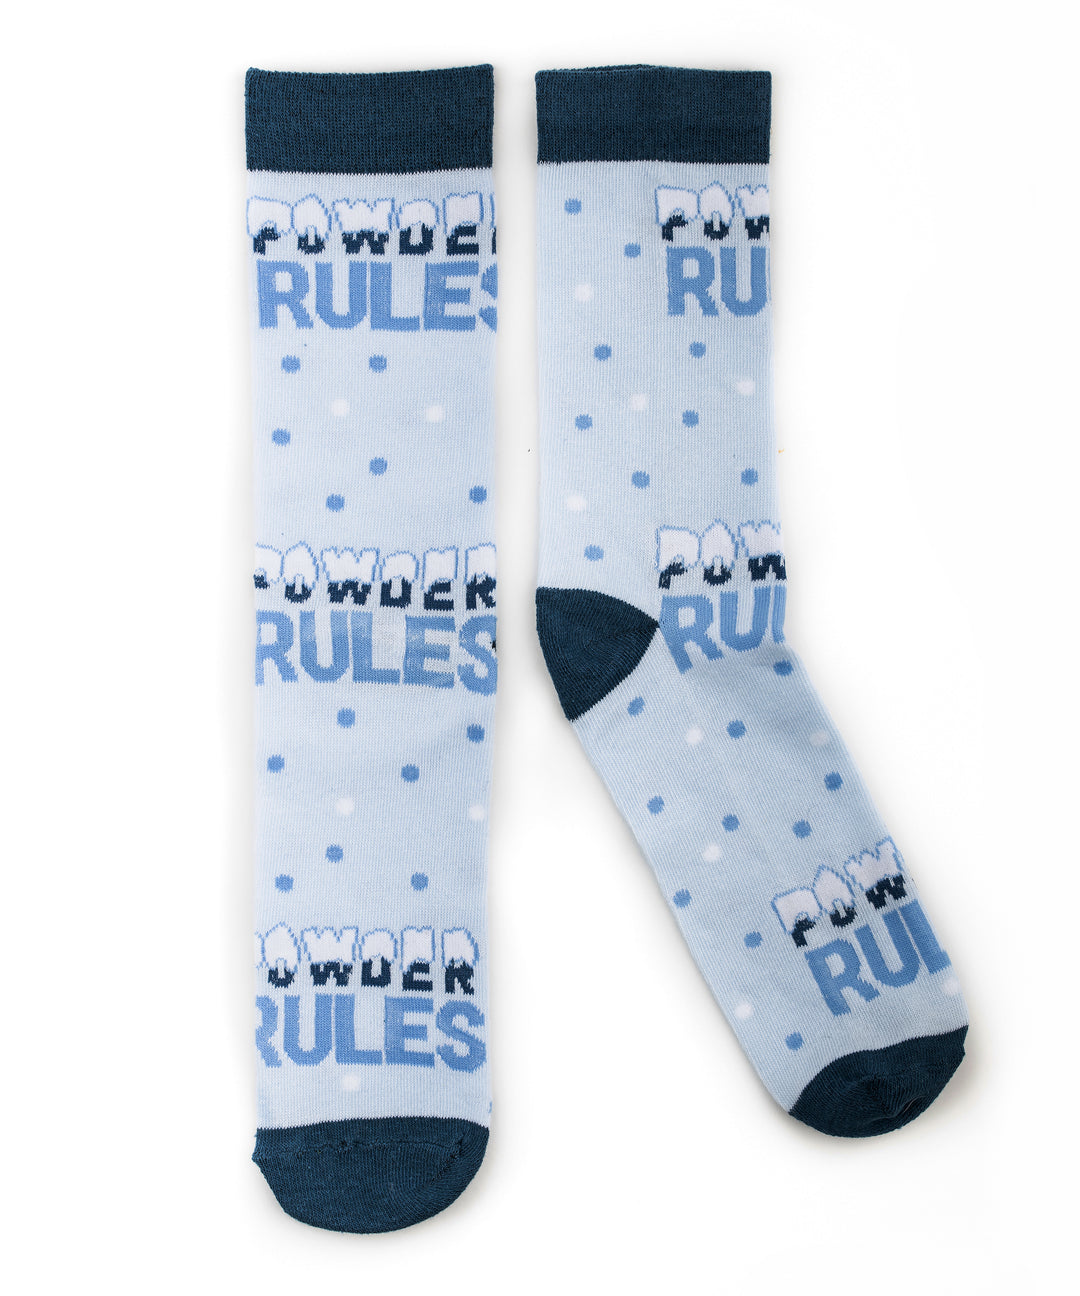 Powder Rules Socks